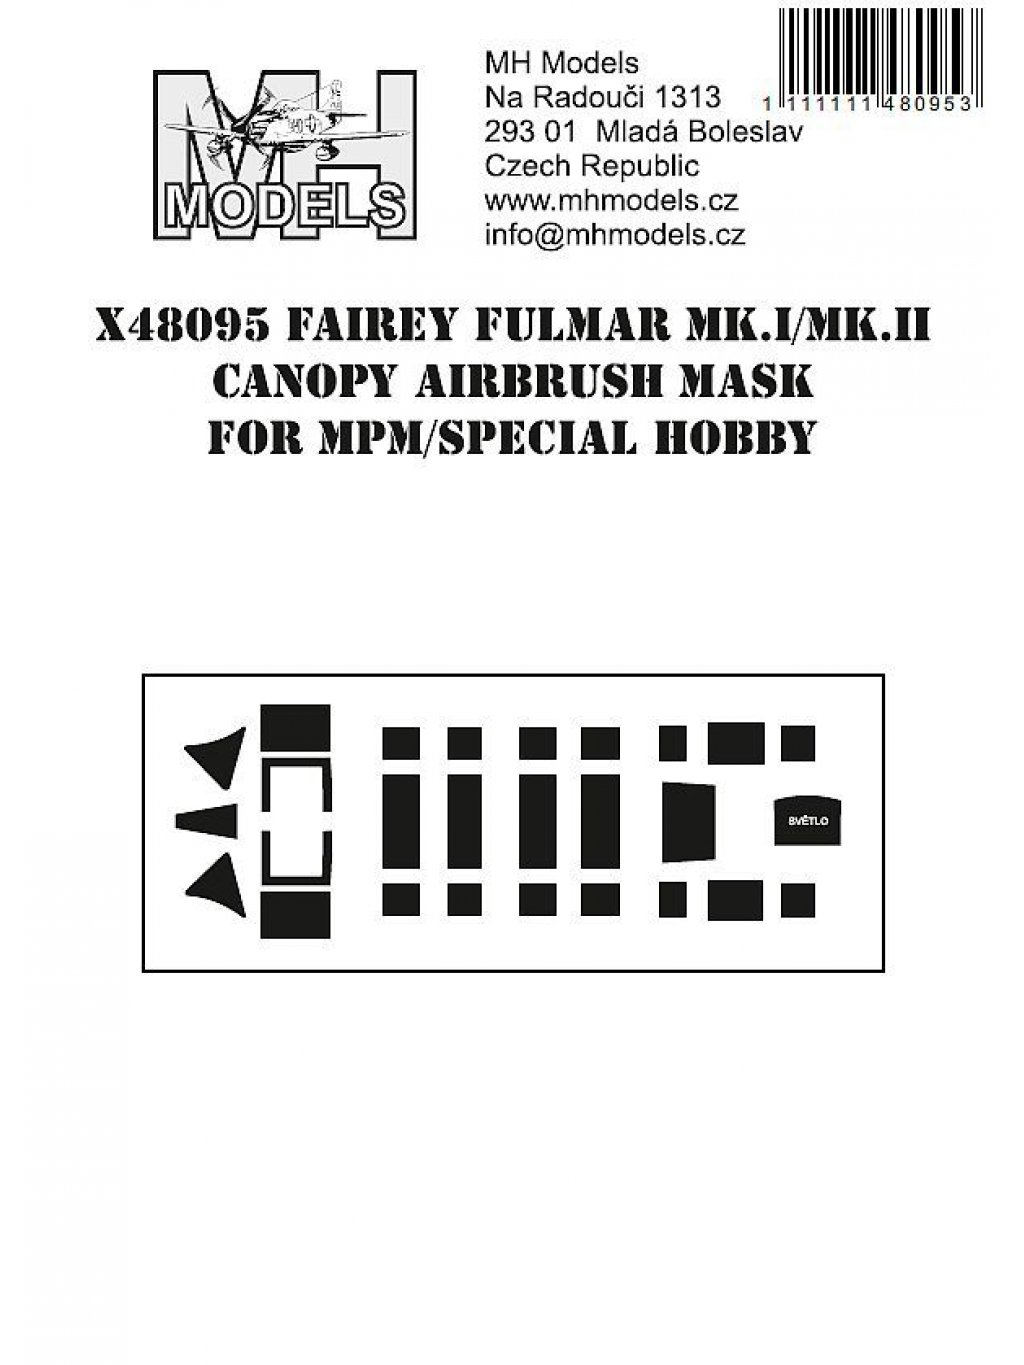 Fairey Fulmar Mk.I/Mk.II Canopy airbrush mask for MPM / Special Hobby